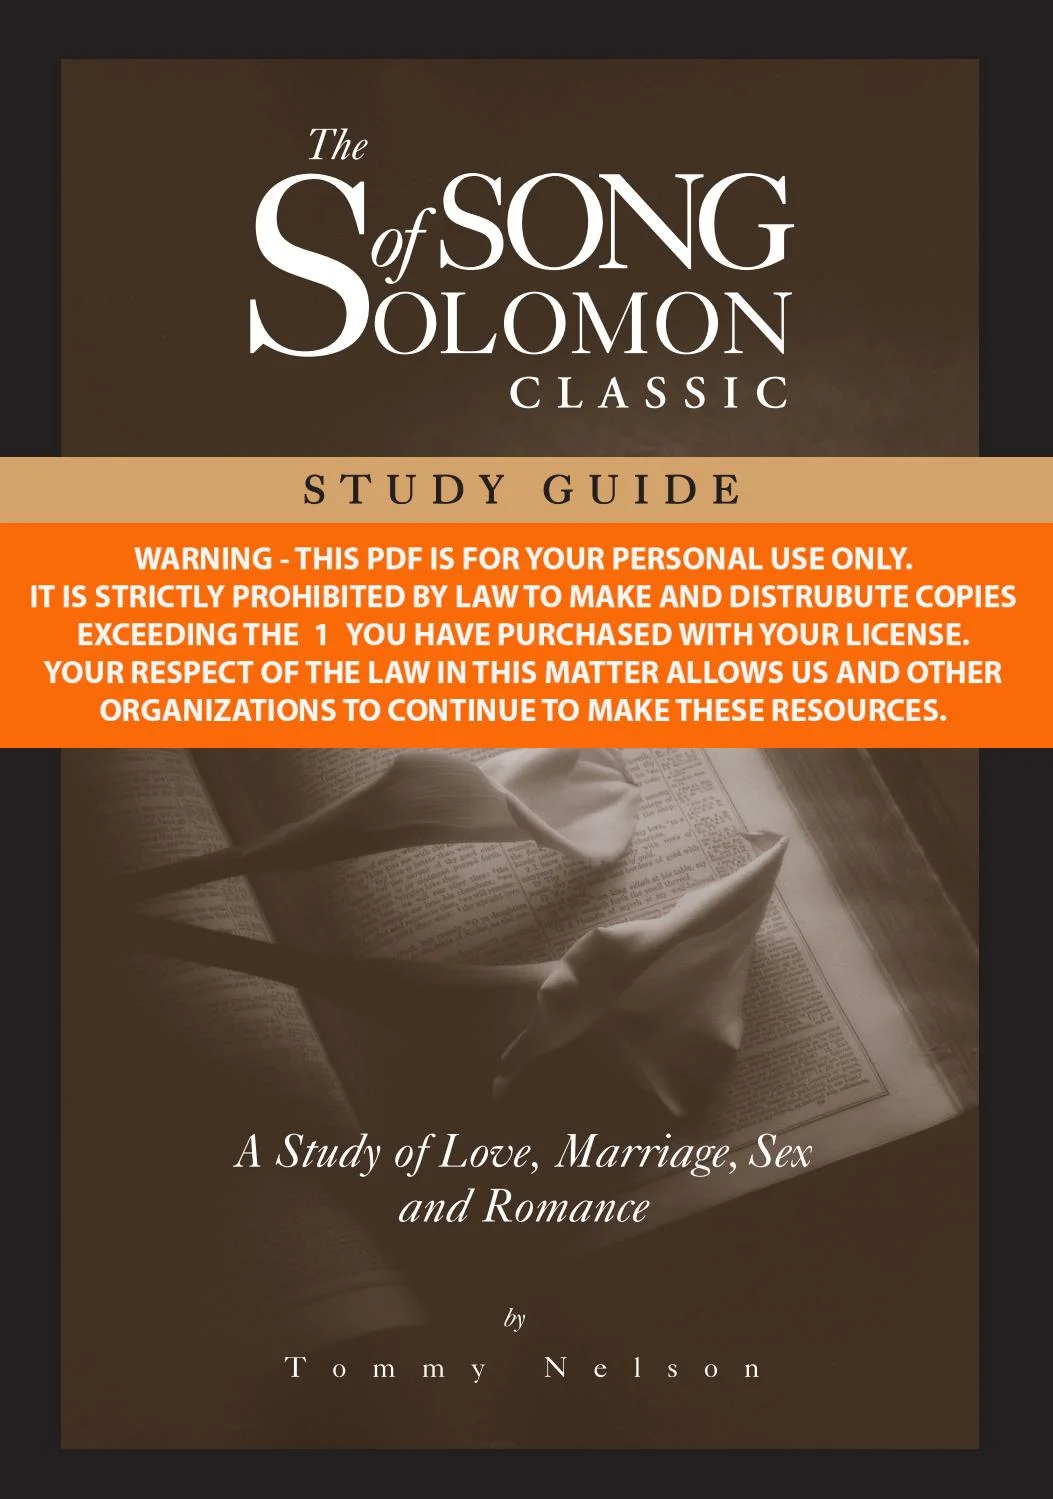 Mingling of souls study guide pdf